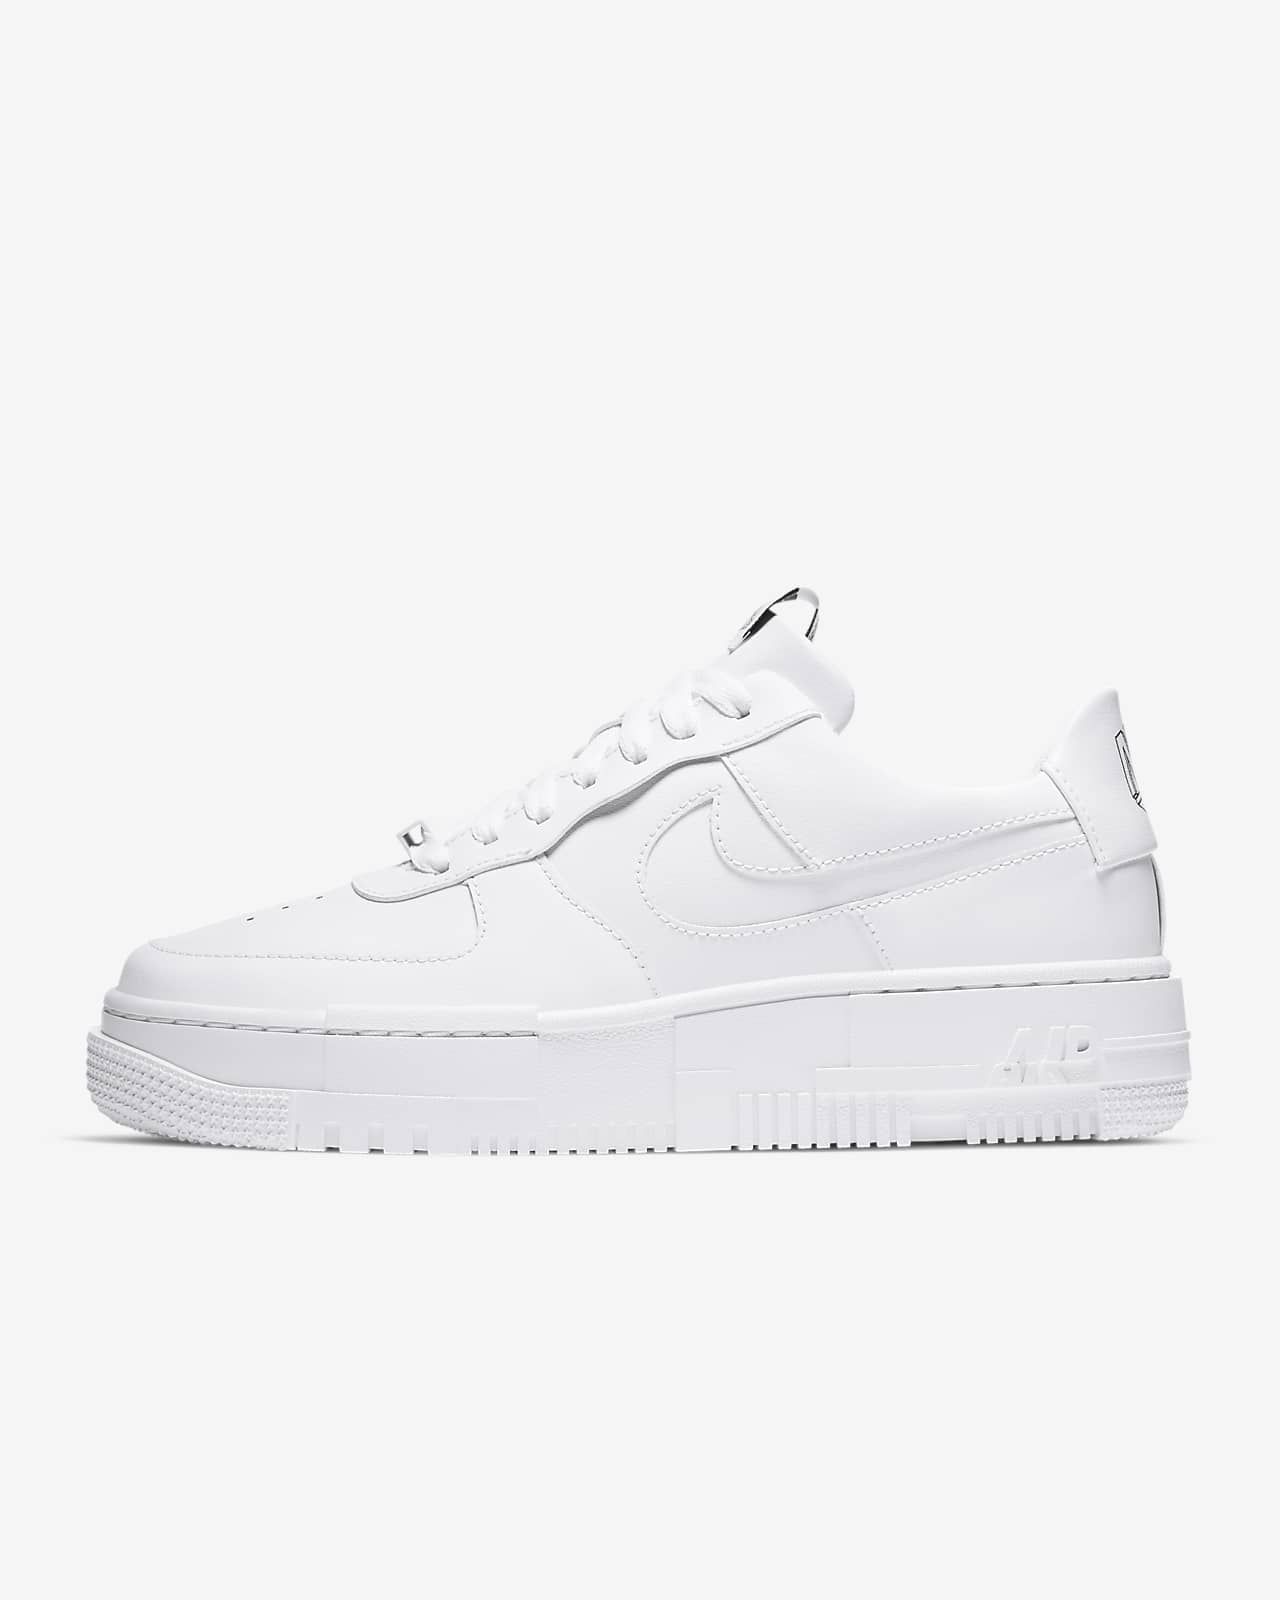 Nike Air Force 1 PixelWomen's Shoe$110 | Nike (US)